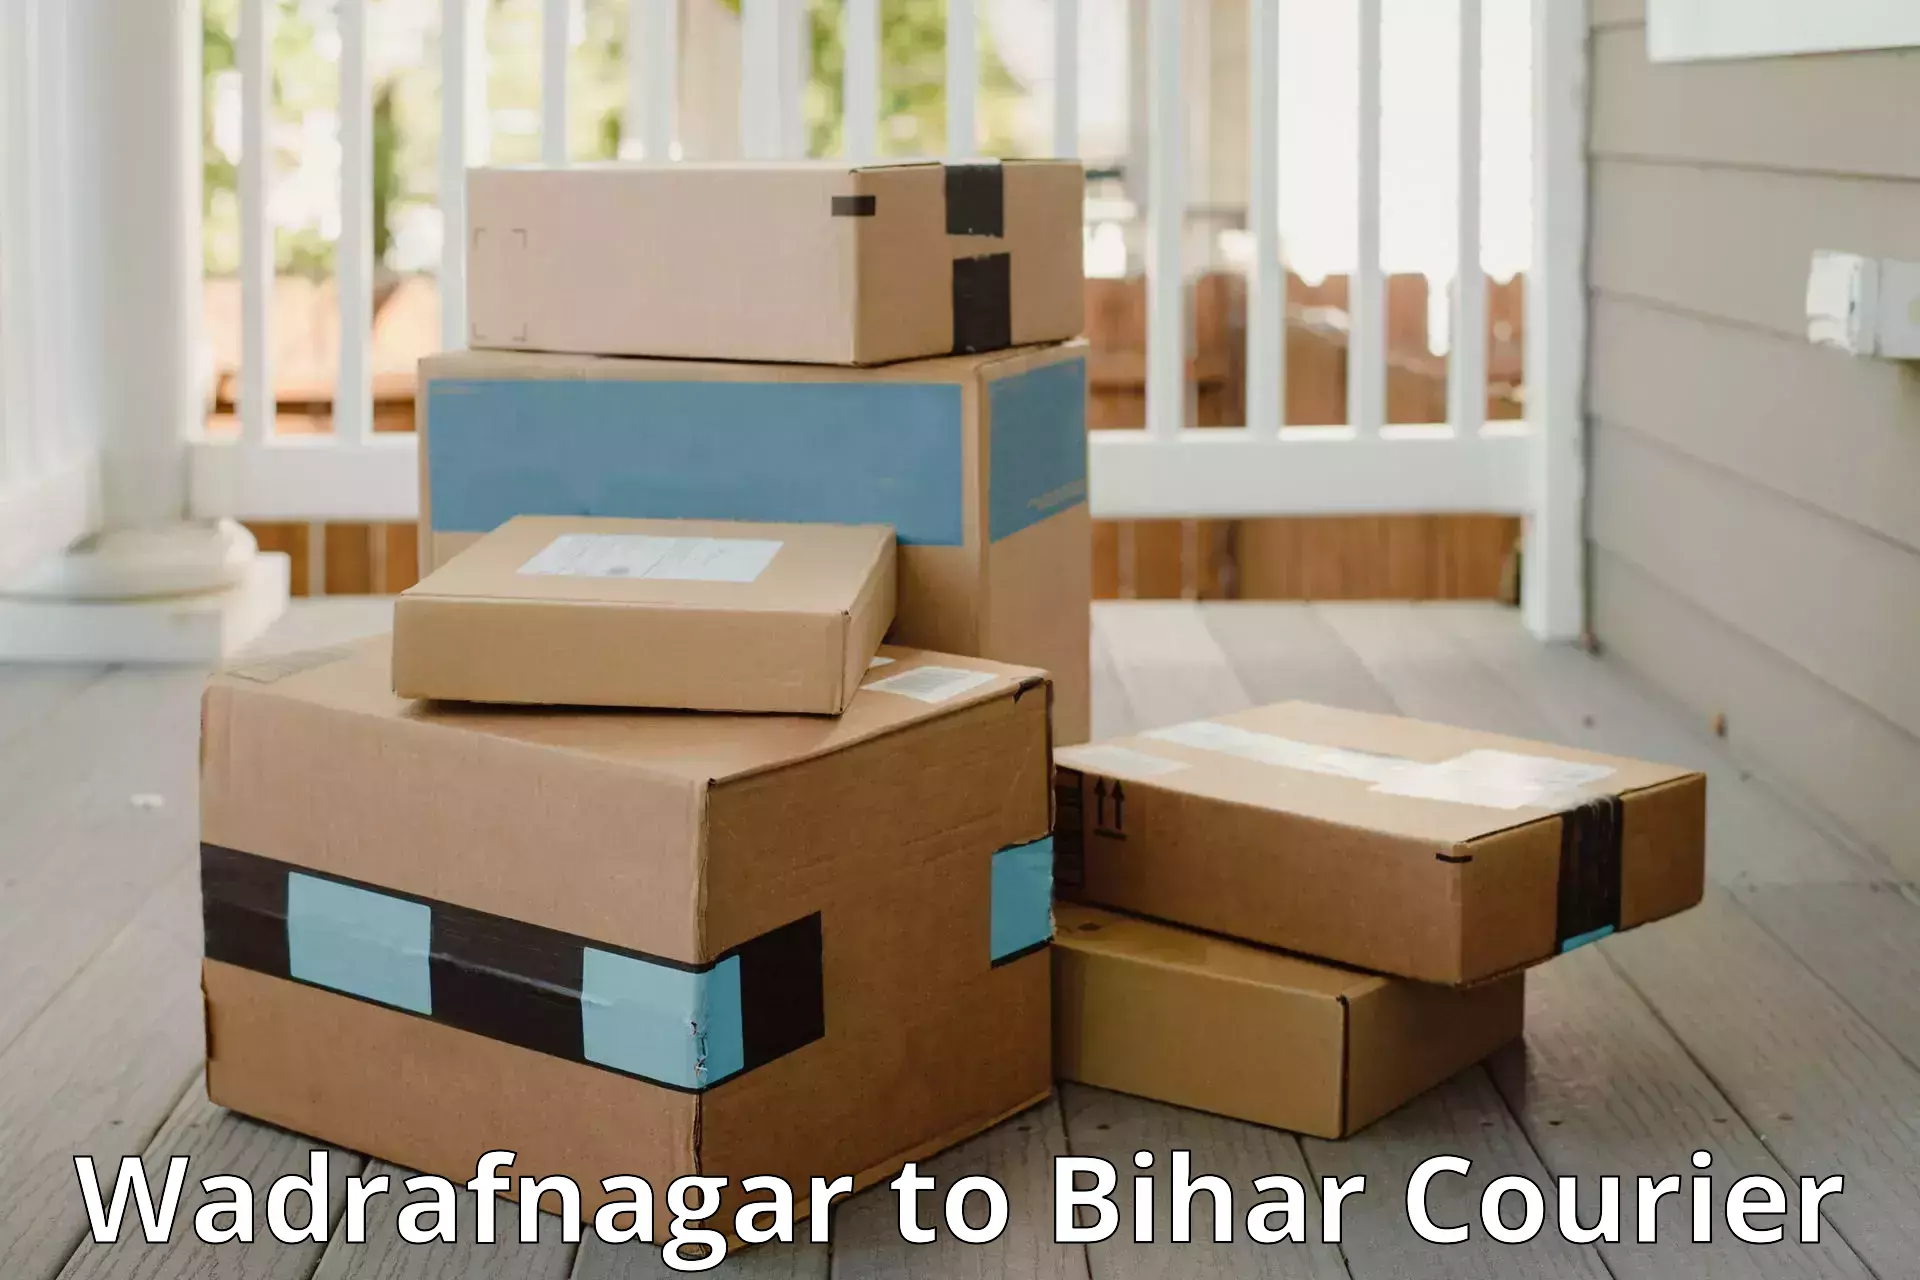 Baggage shipping experts Wadrafnagar to Ghanshyampur